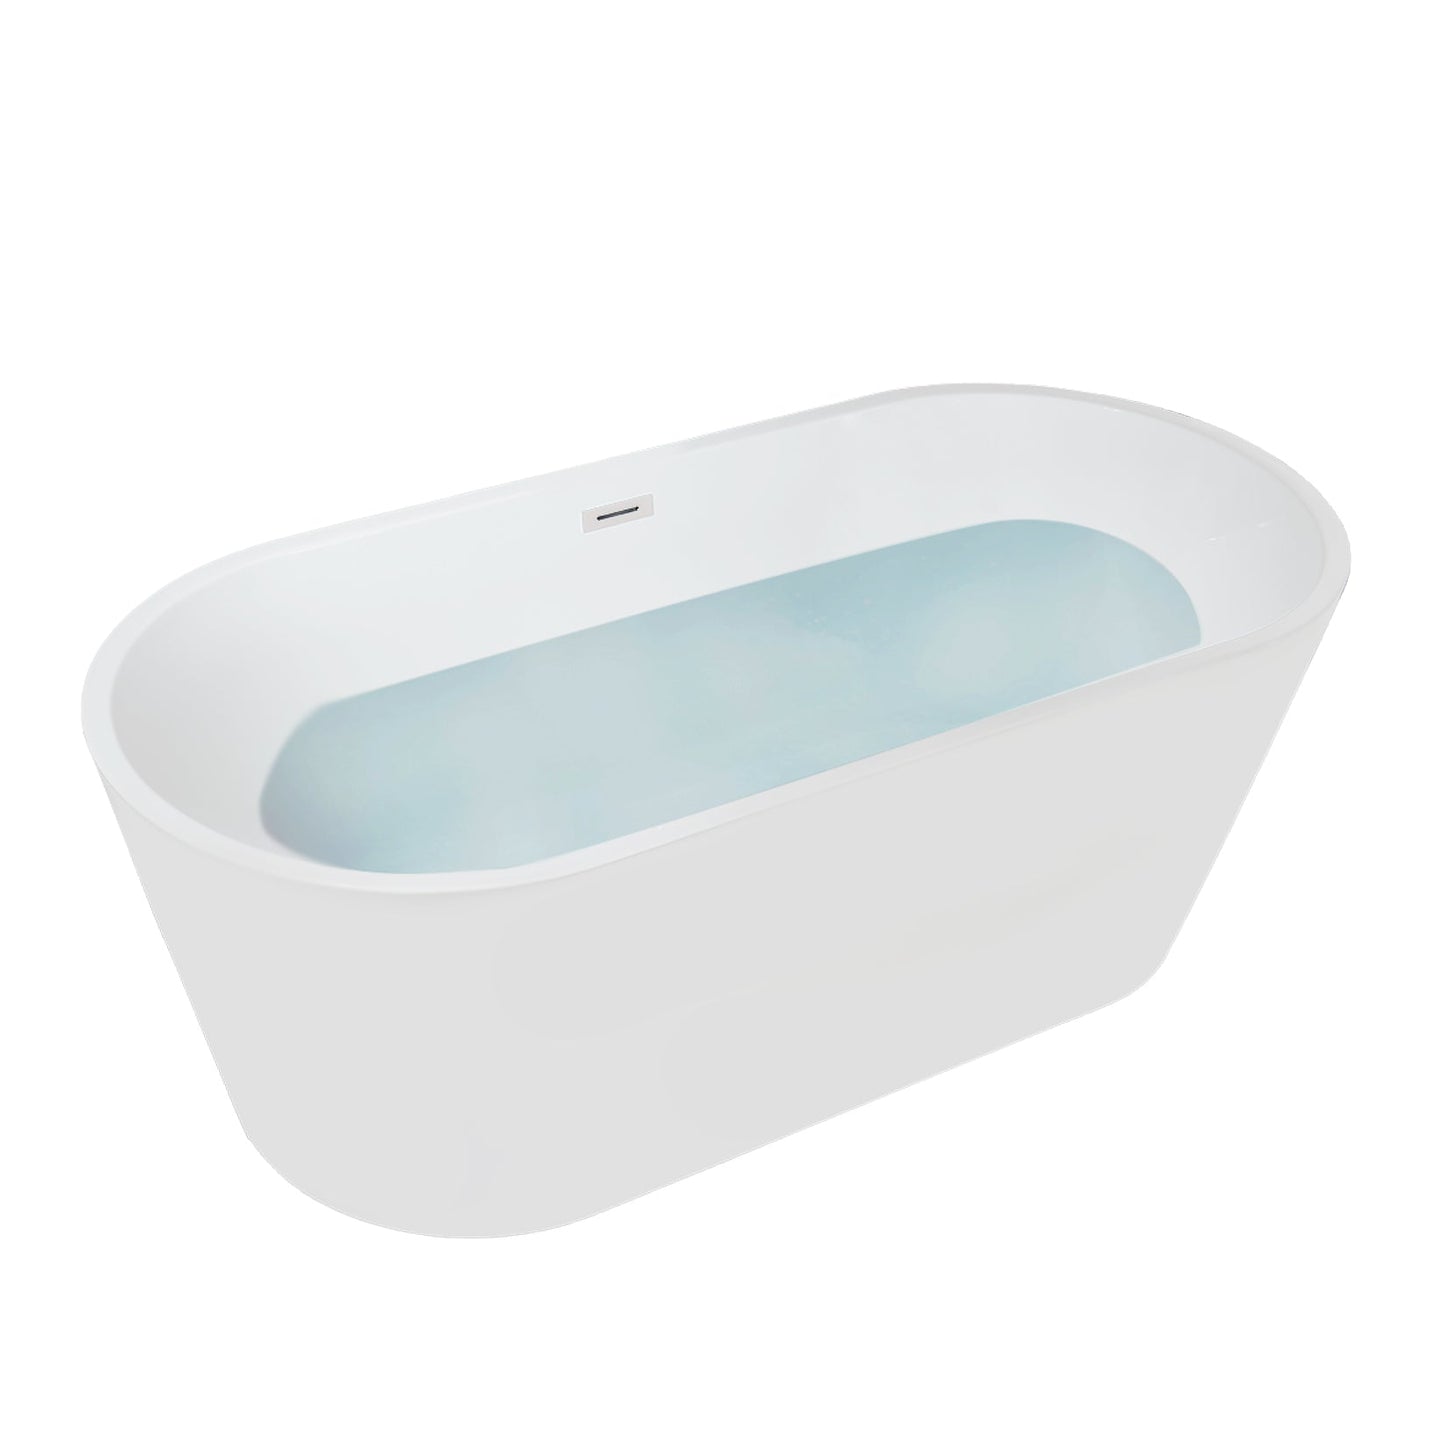 Bell + Modern Bathtubs and Tub Fillers Montserrat in White Freestanding Acrylic Flatbottom Soaking Bathtub